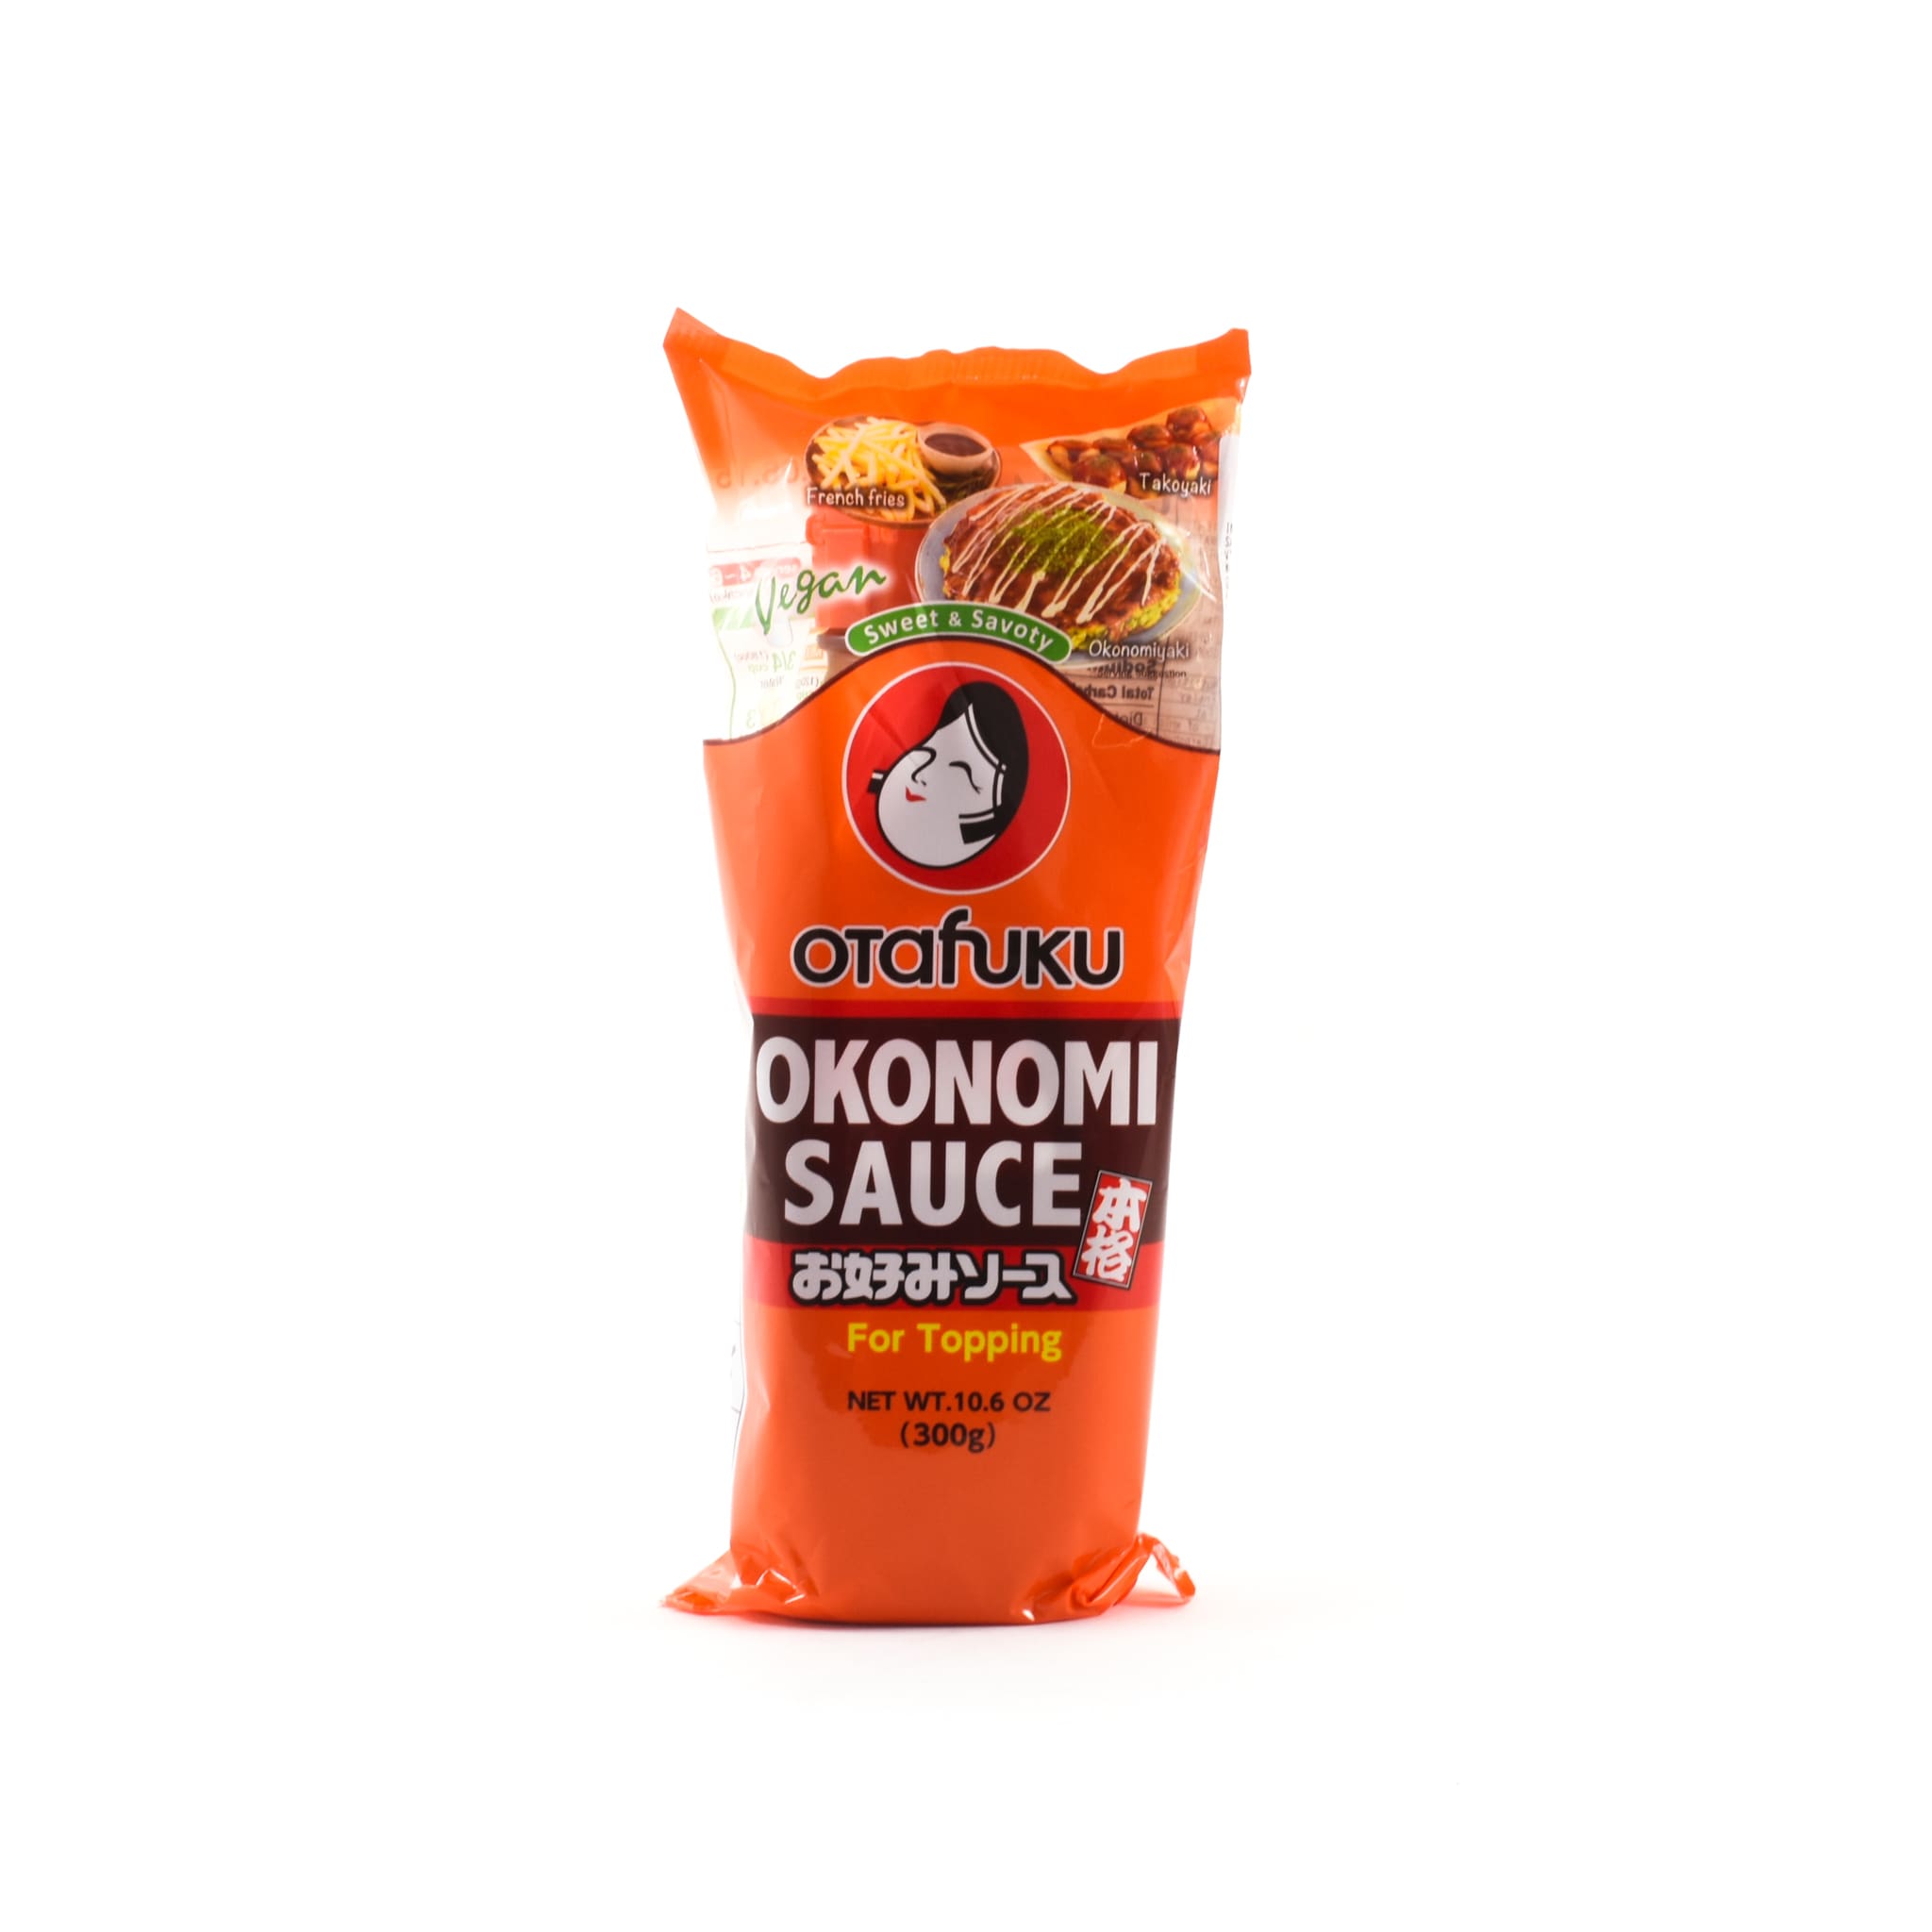 Okonomi Sauce, 300g